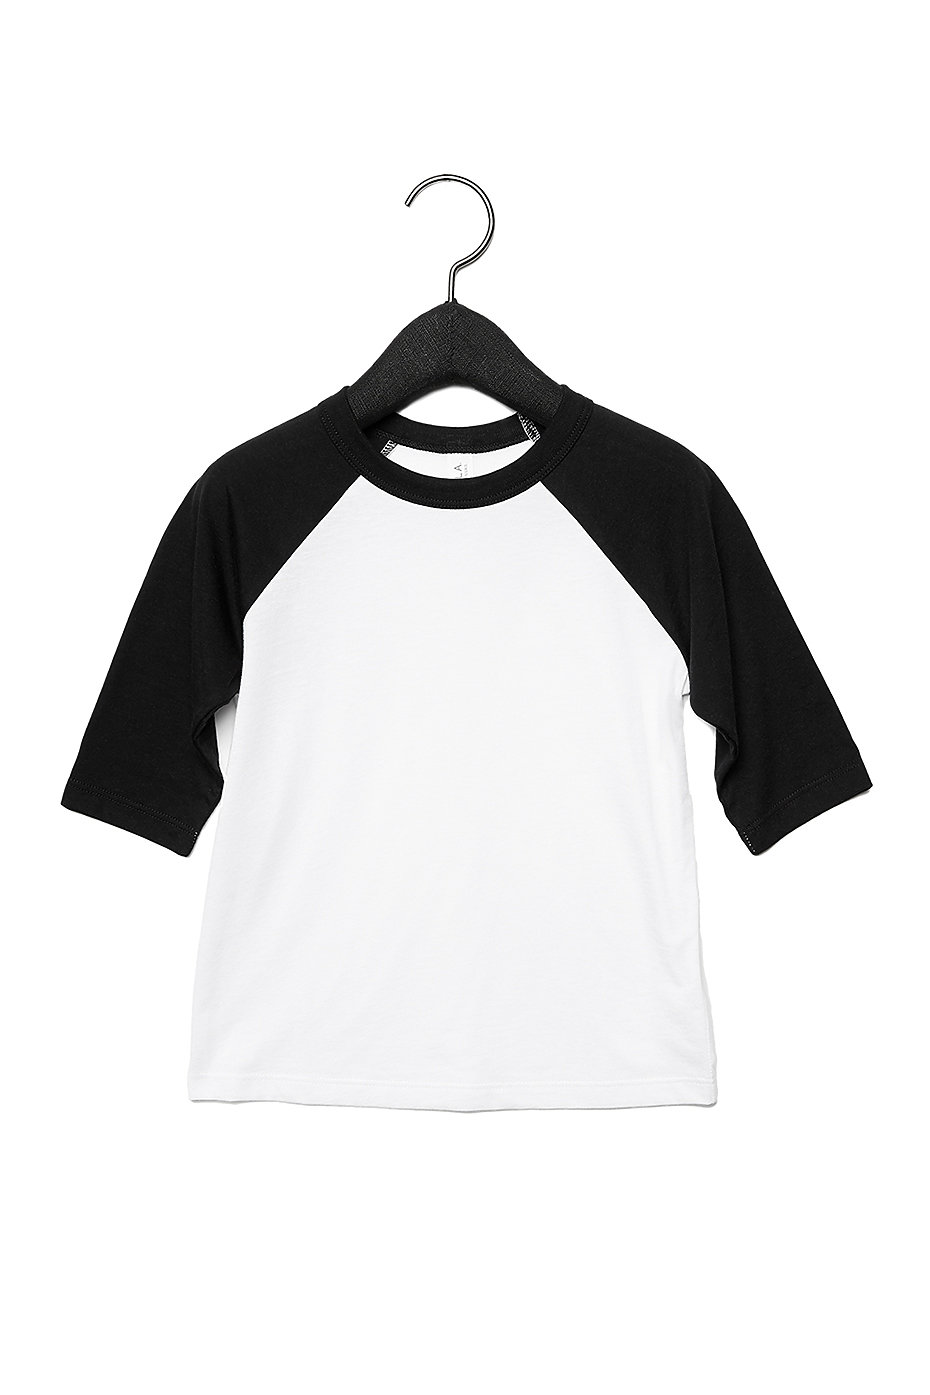 Wholesale Toddler Clothes | Toddler T Shirts | 3 Quarter Sleeve Shirts |  Plain T Shirts | BELLA+CANVAS ®